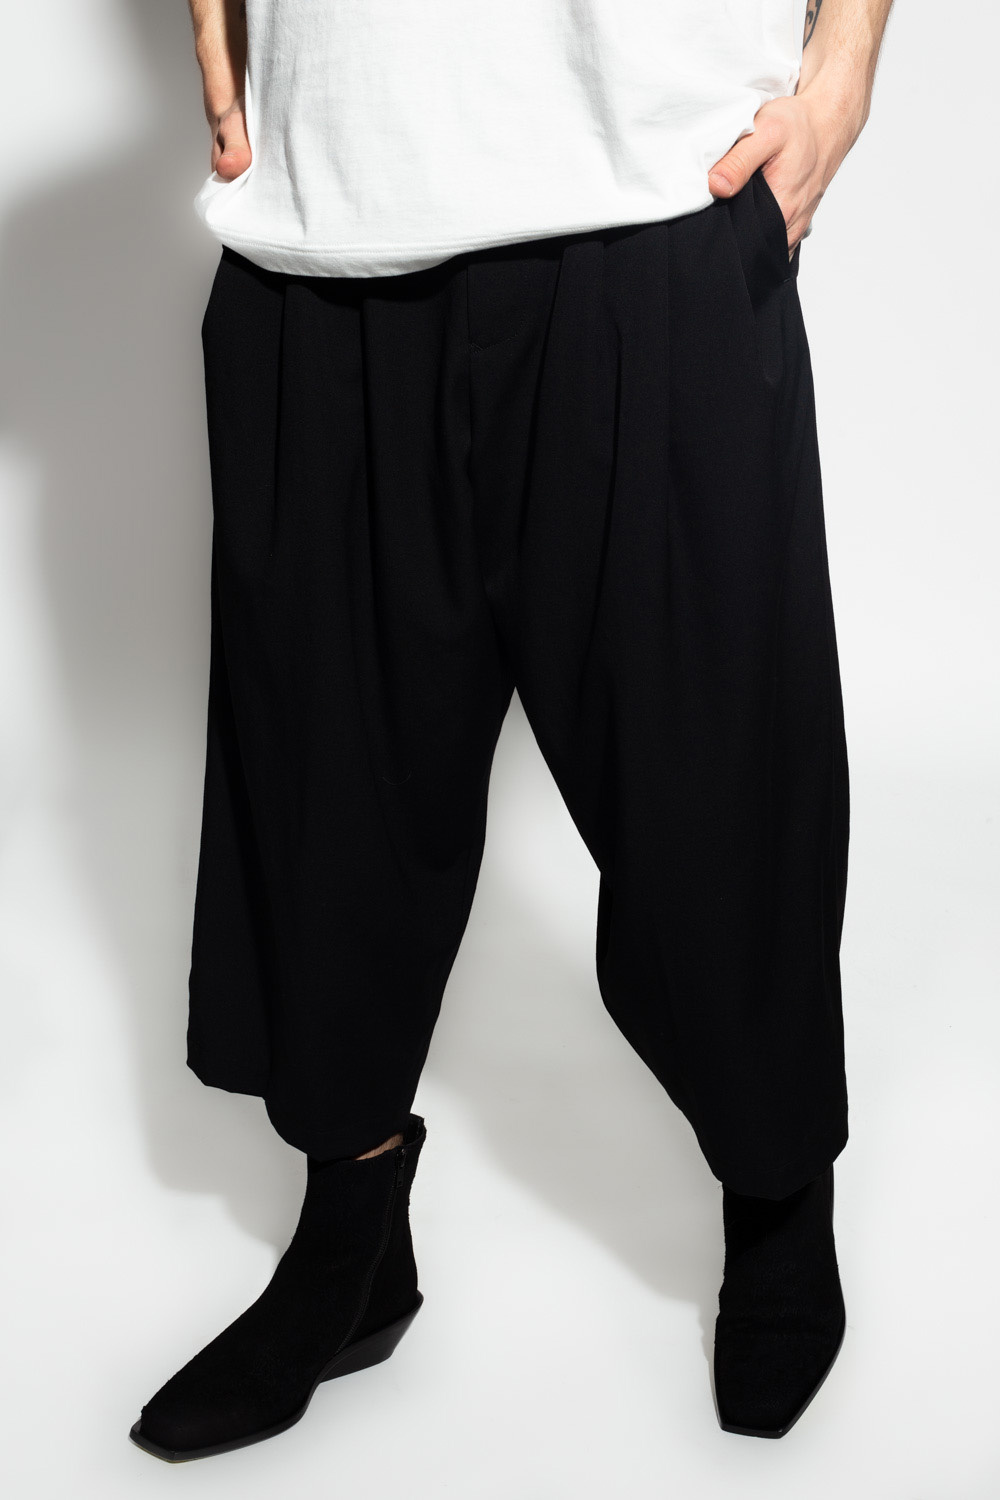 Ys Yohji Yamamoto Slim Trousers in Black for Men  Lyst